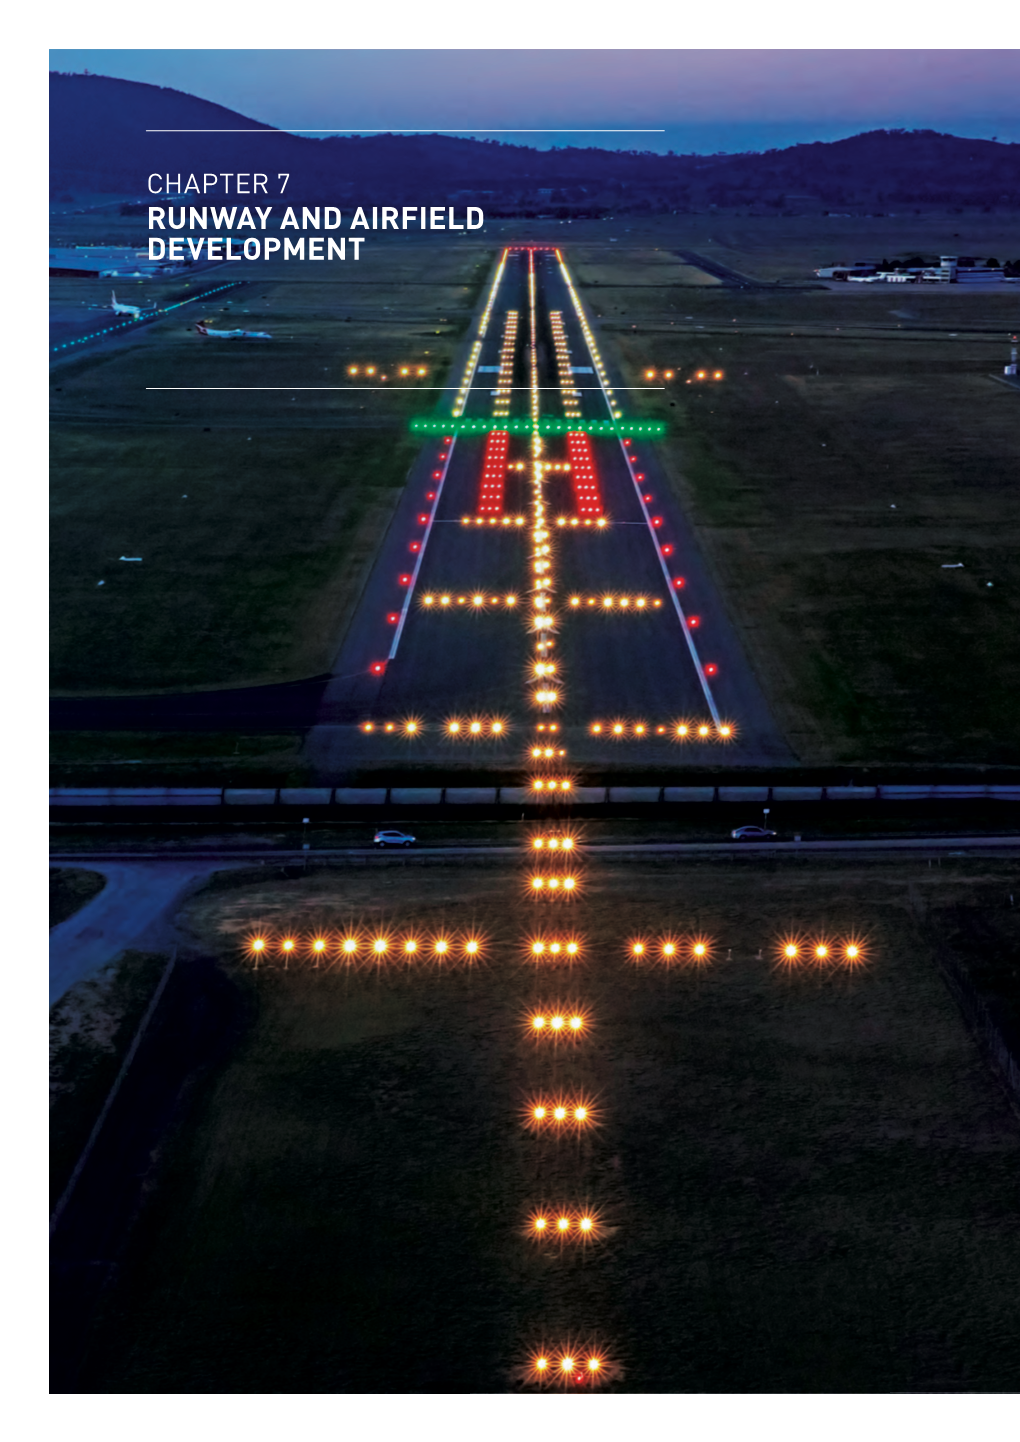 Runway and Airfield Development